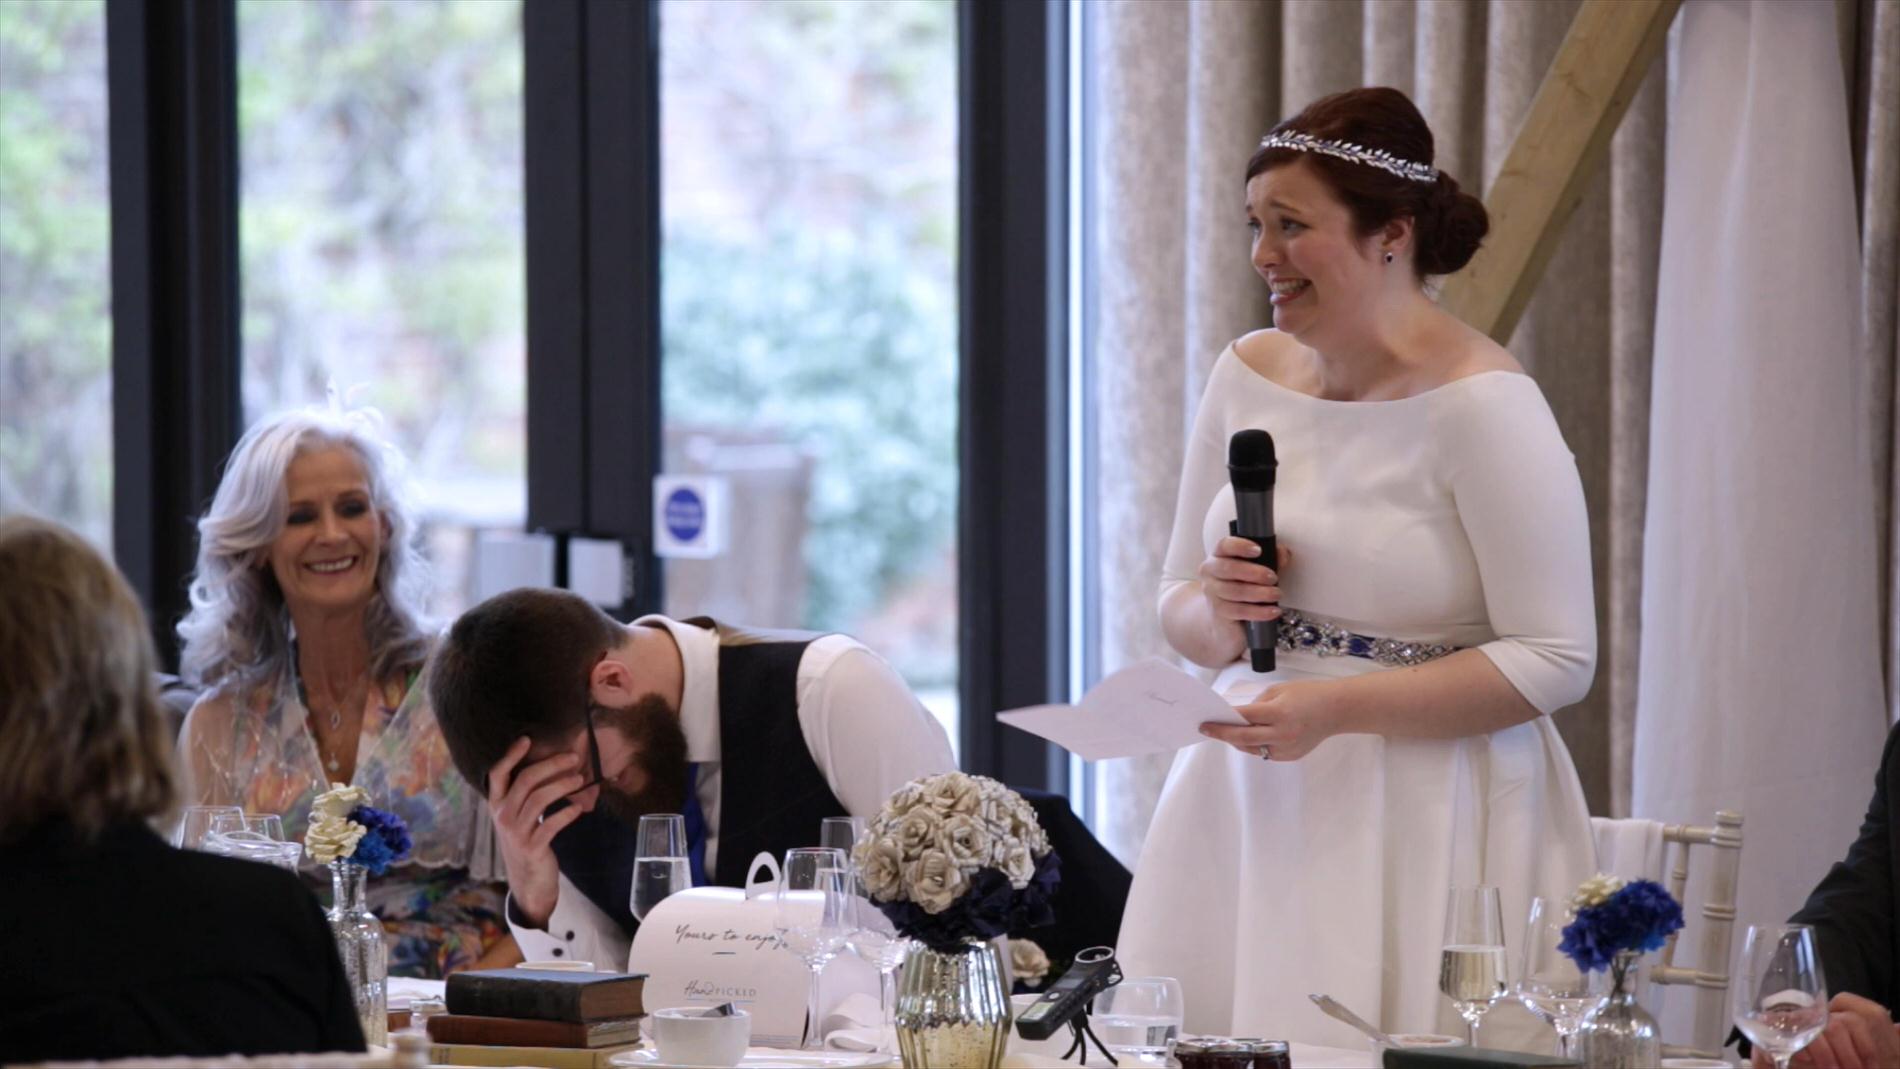 bride tells funny story during wedding speech